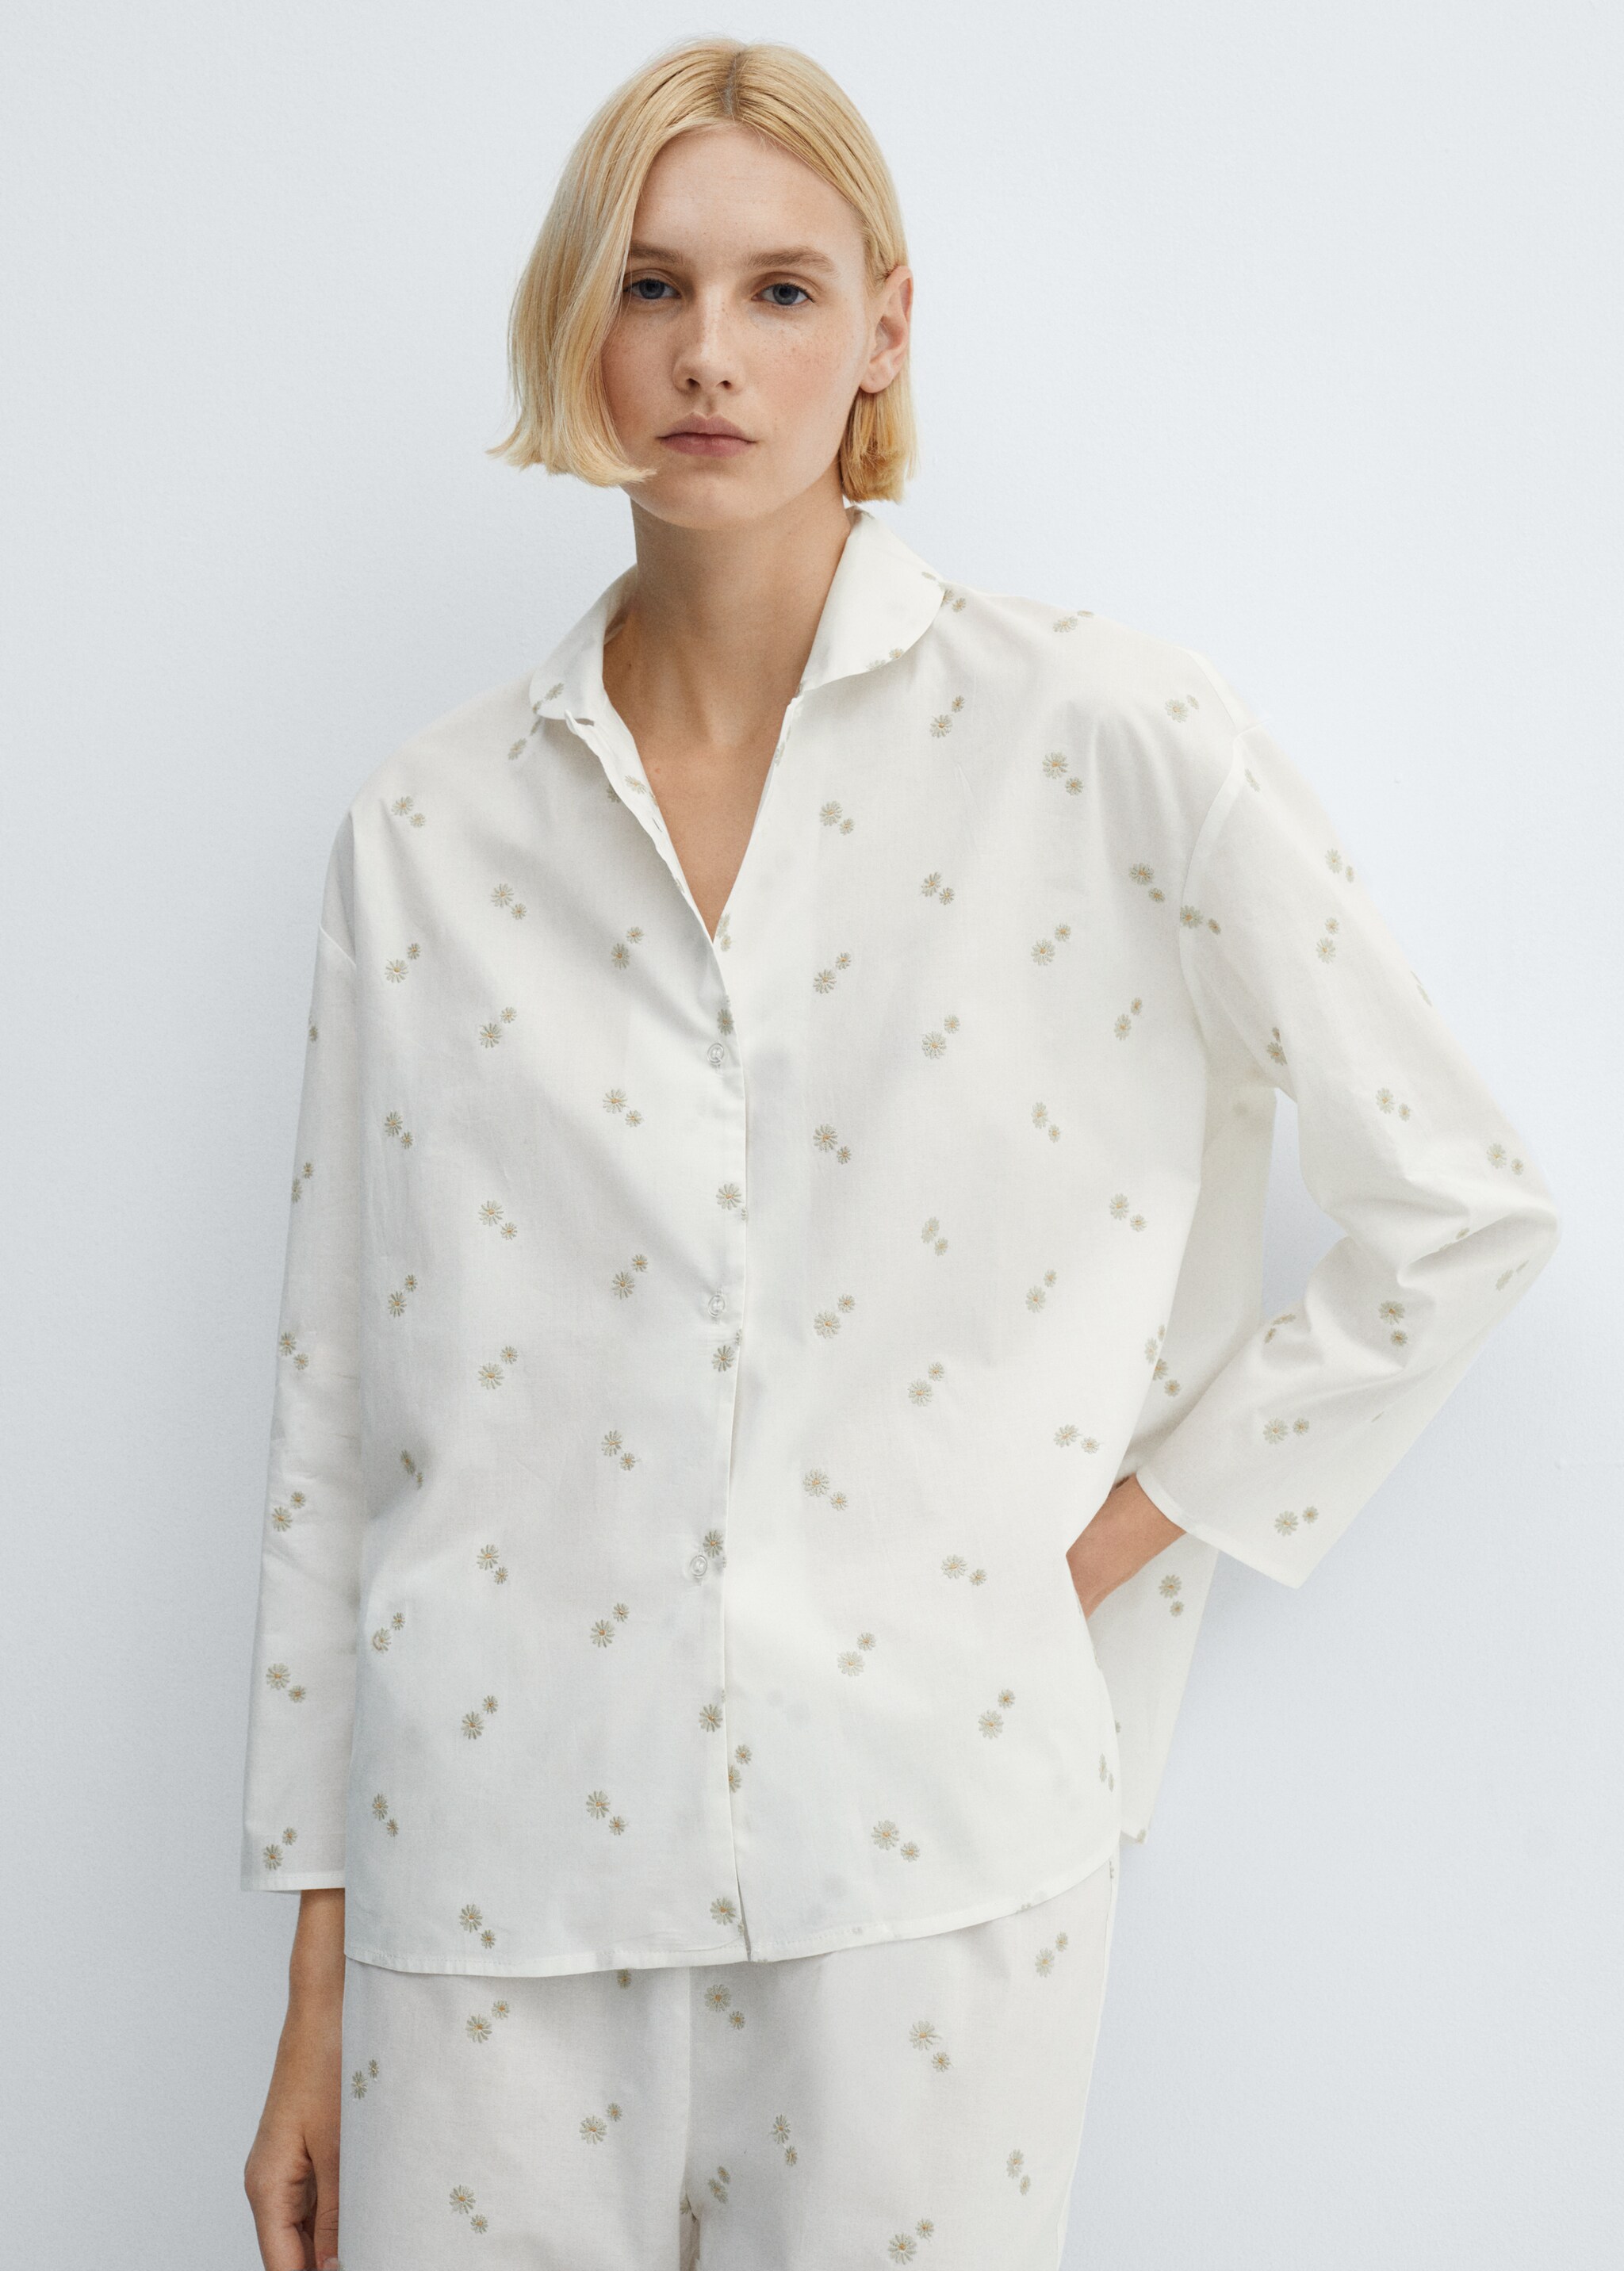 Chemise pyjama coton broderie florale - Plan moyen